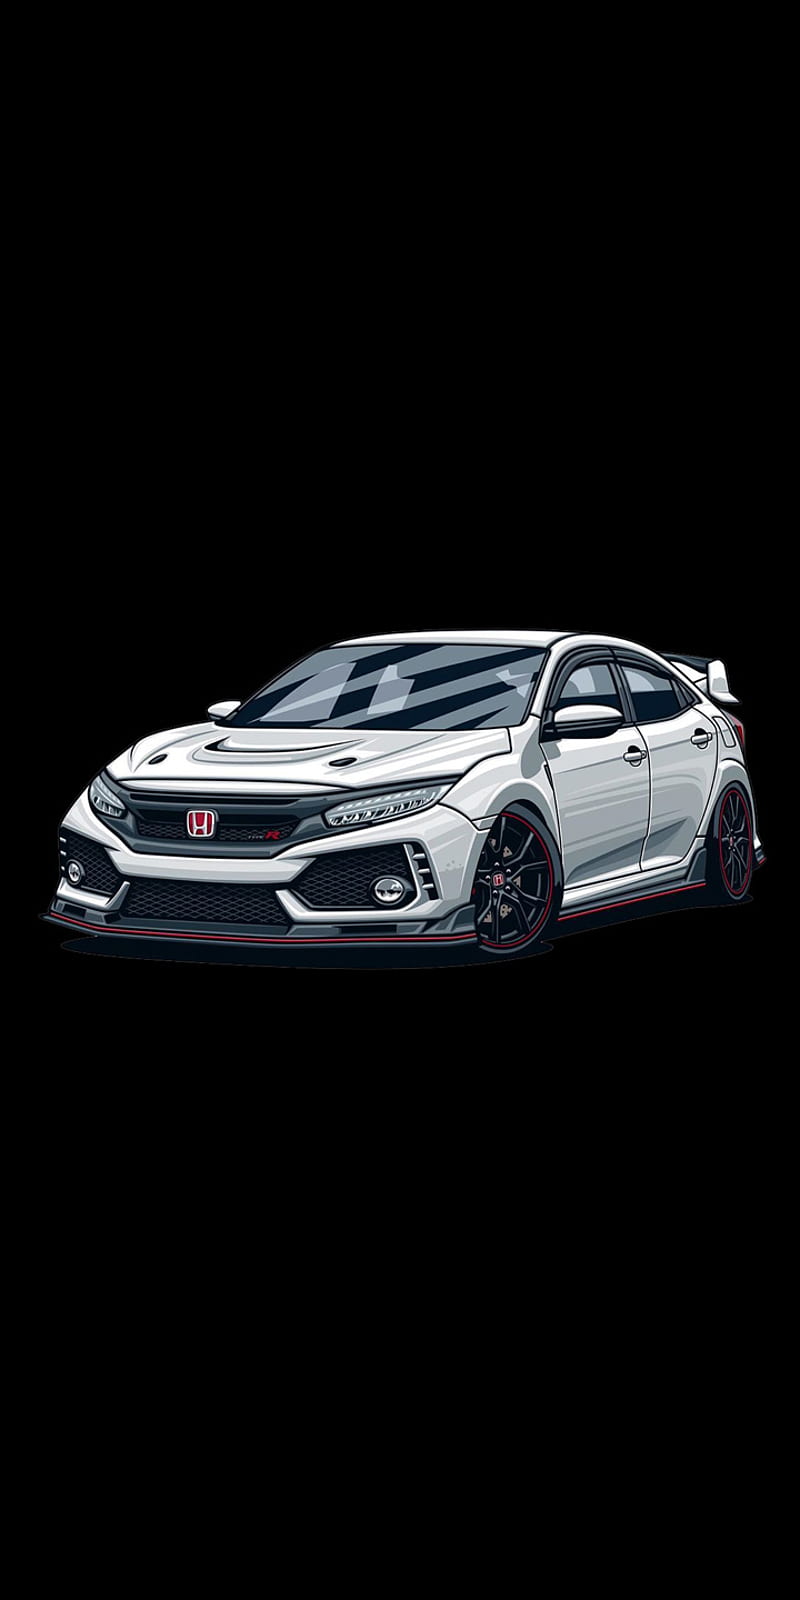 Honda Civic Type R Wallpapers  Top Free Honda Civic Type R Backgrounds   WallpaperAccess